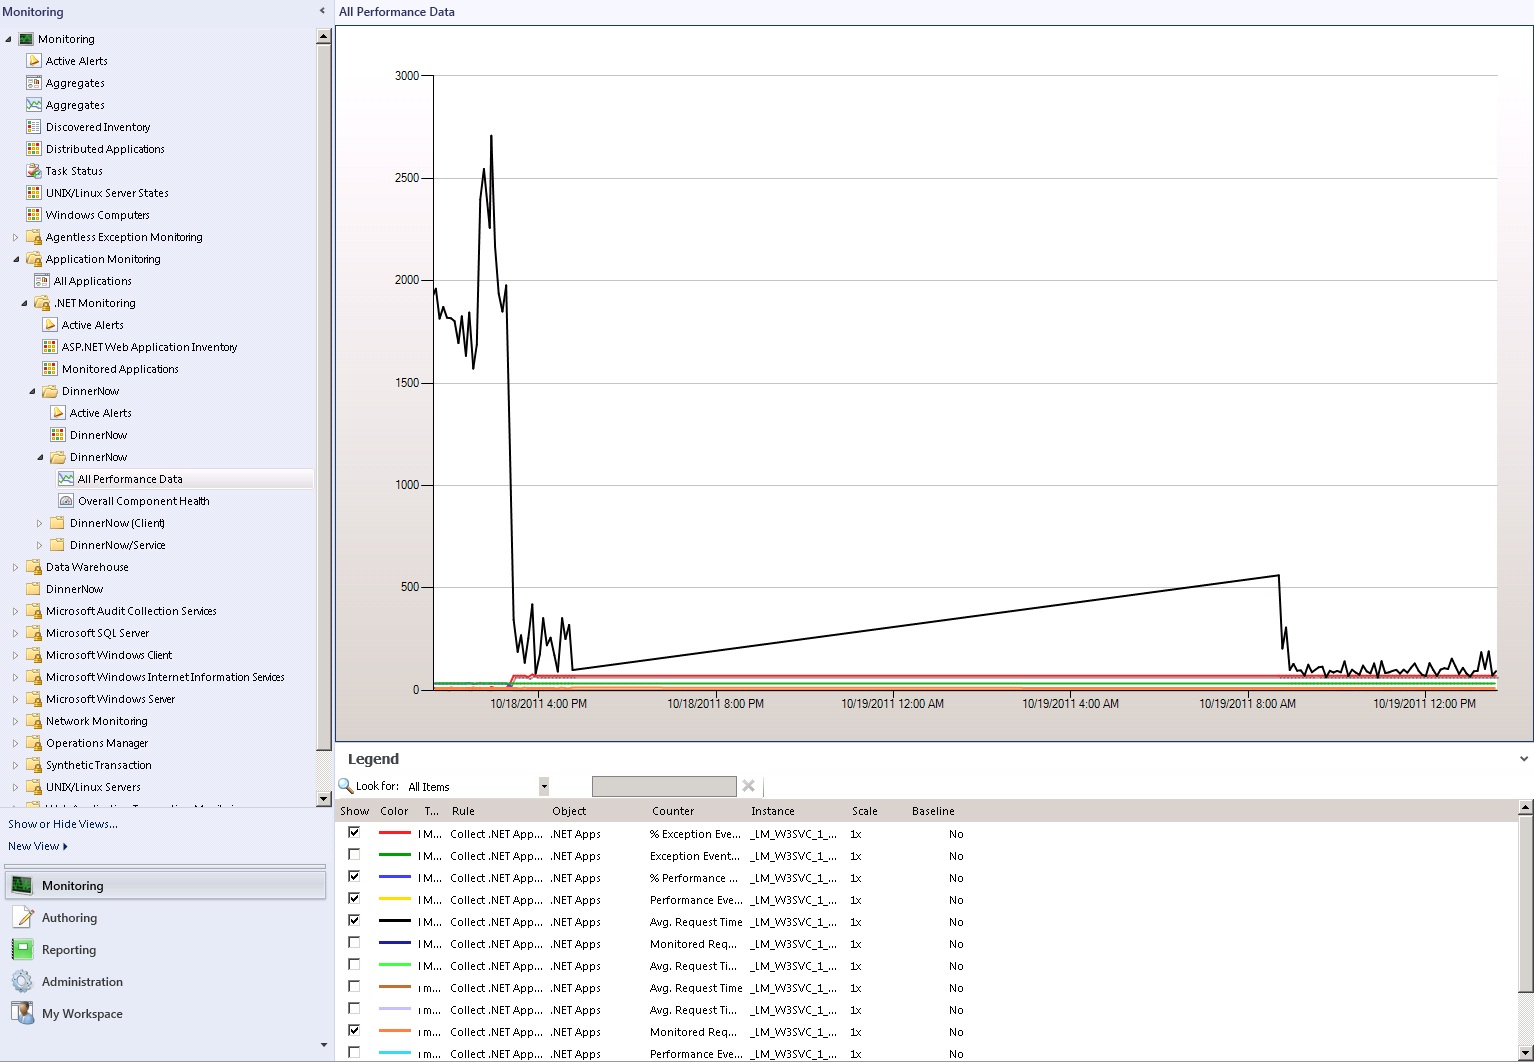 Screenshot showing All Performance Data view.